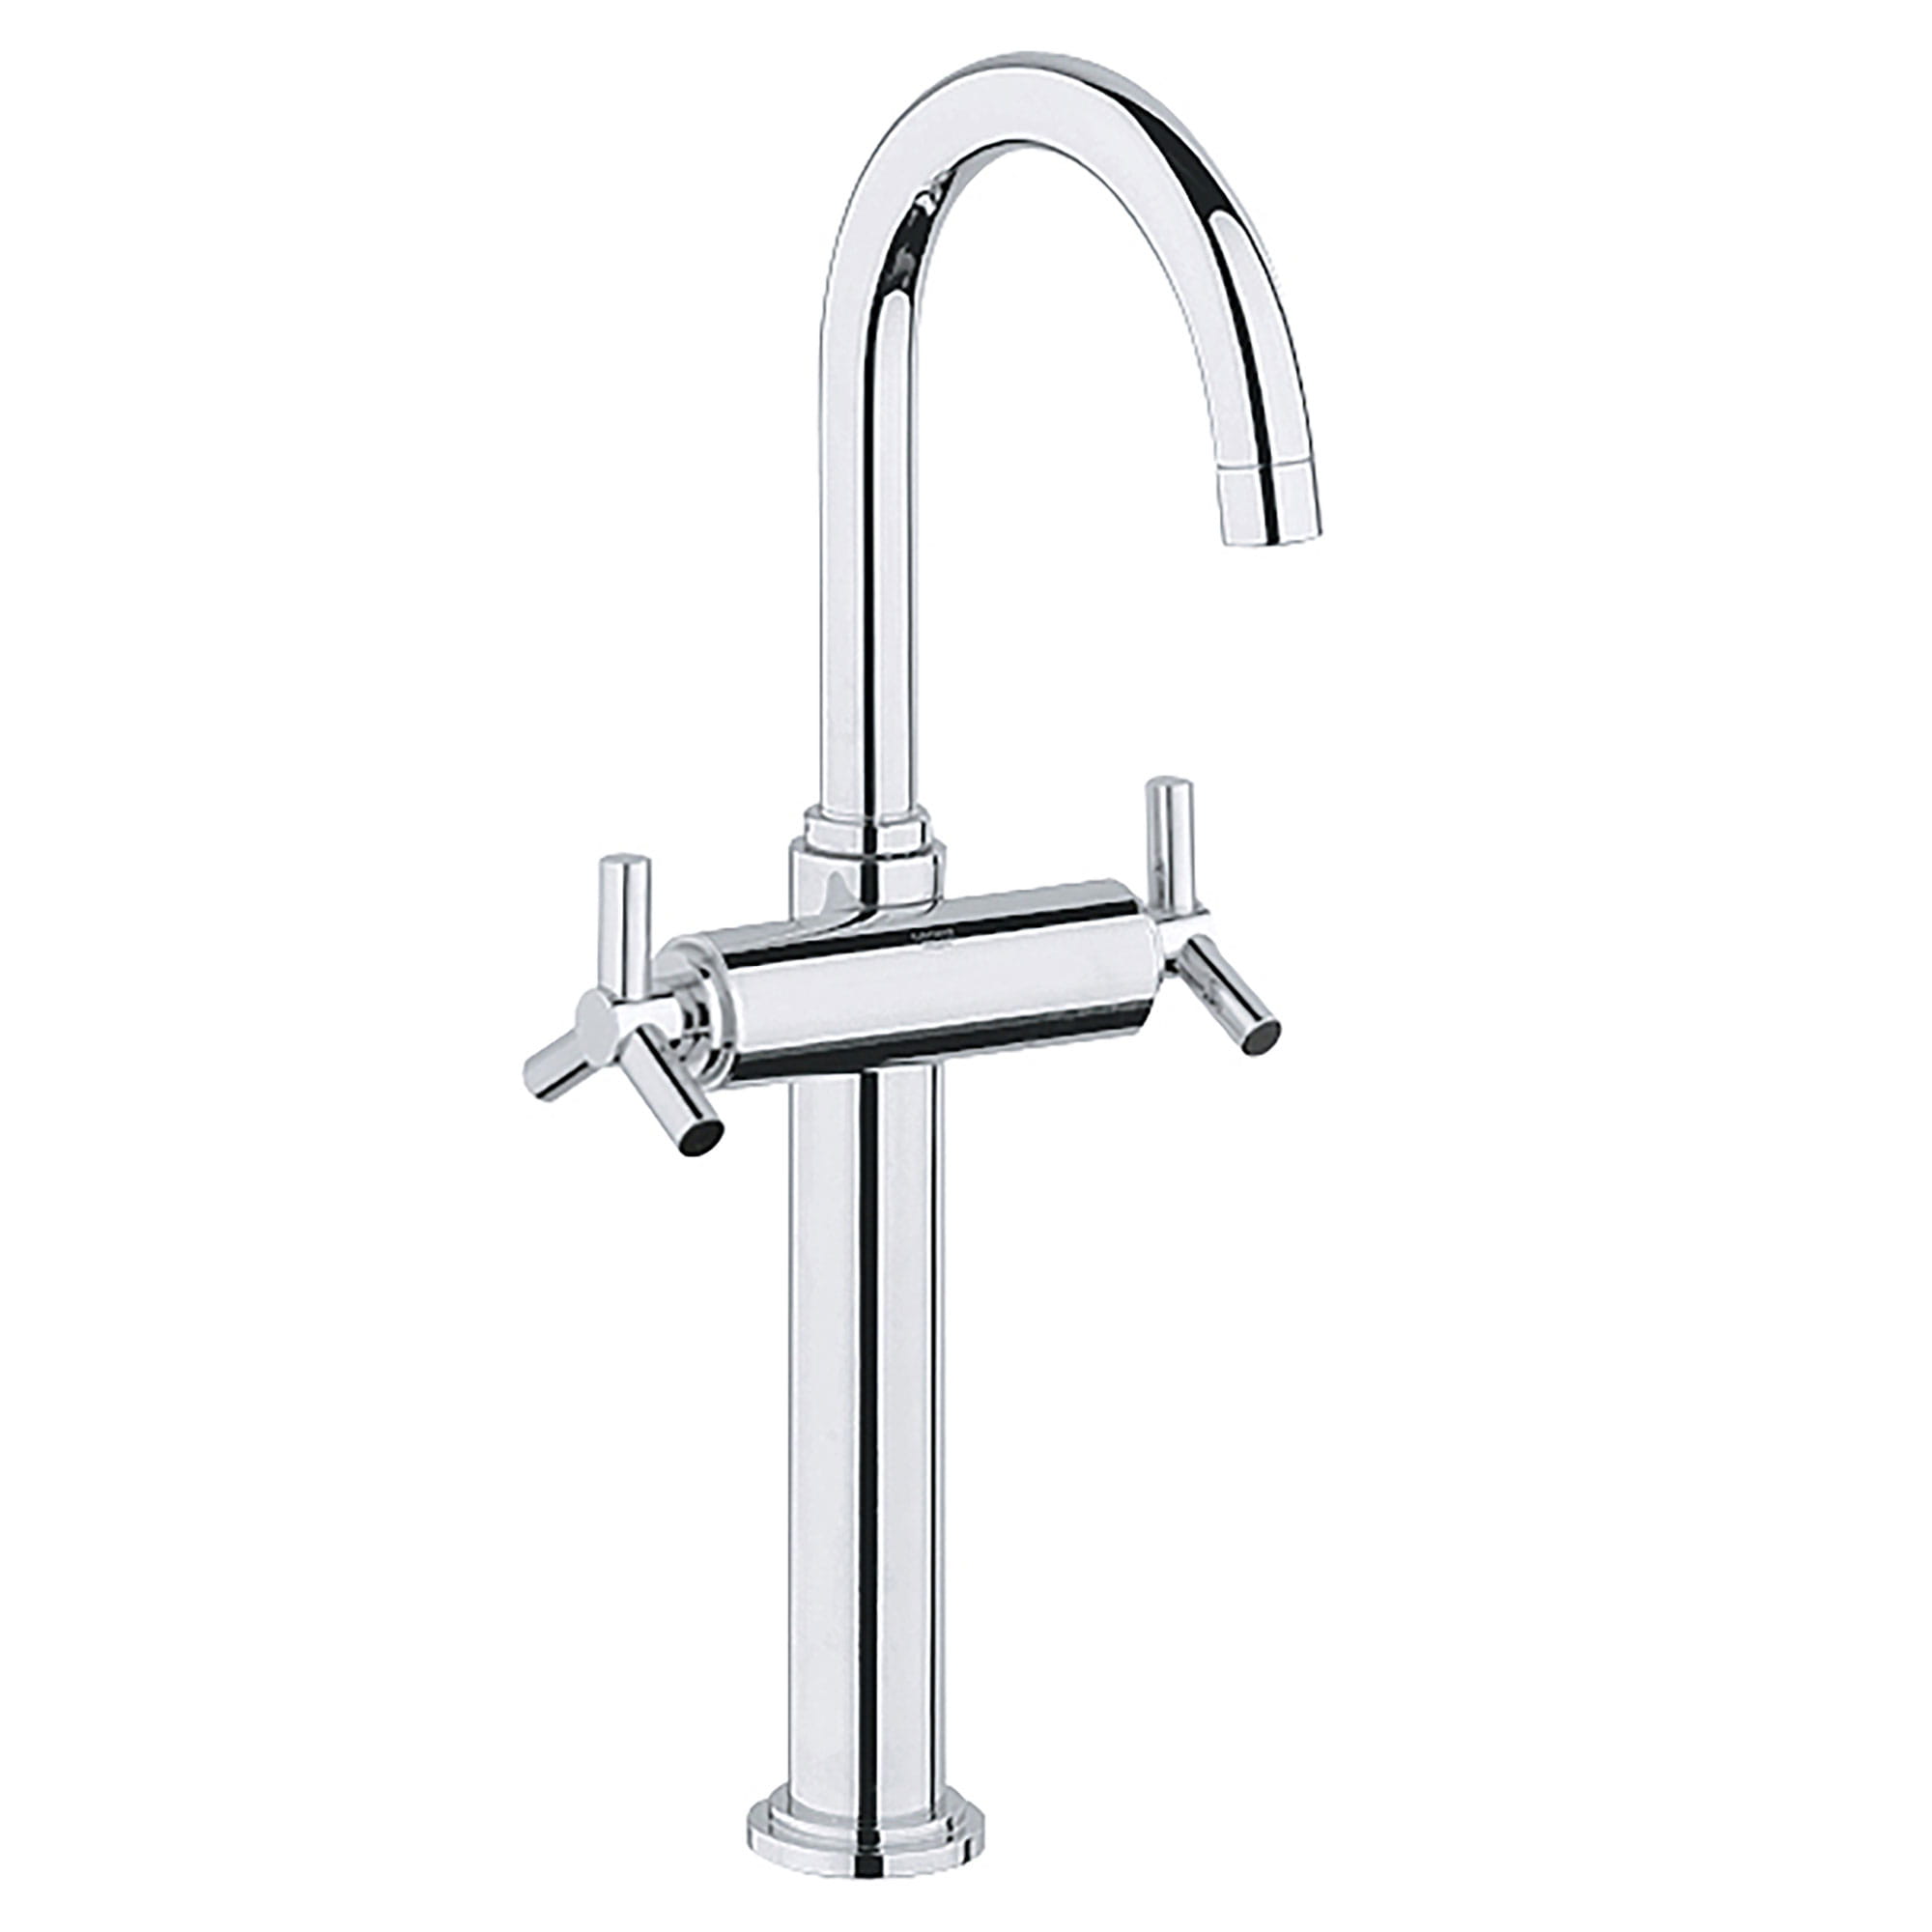 GROHE Grohe Atrio Single Hole Bathroom  Faucet in Chrome LEVER HANDLES 2104600A 6A3 